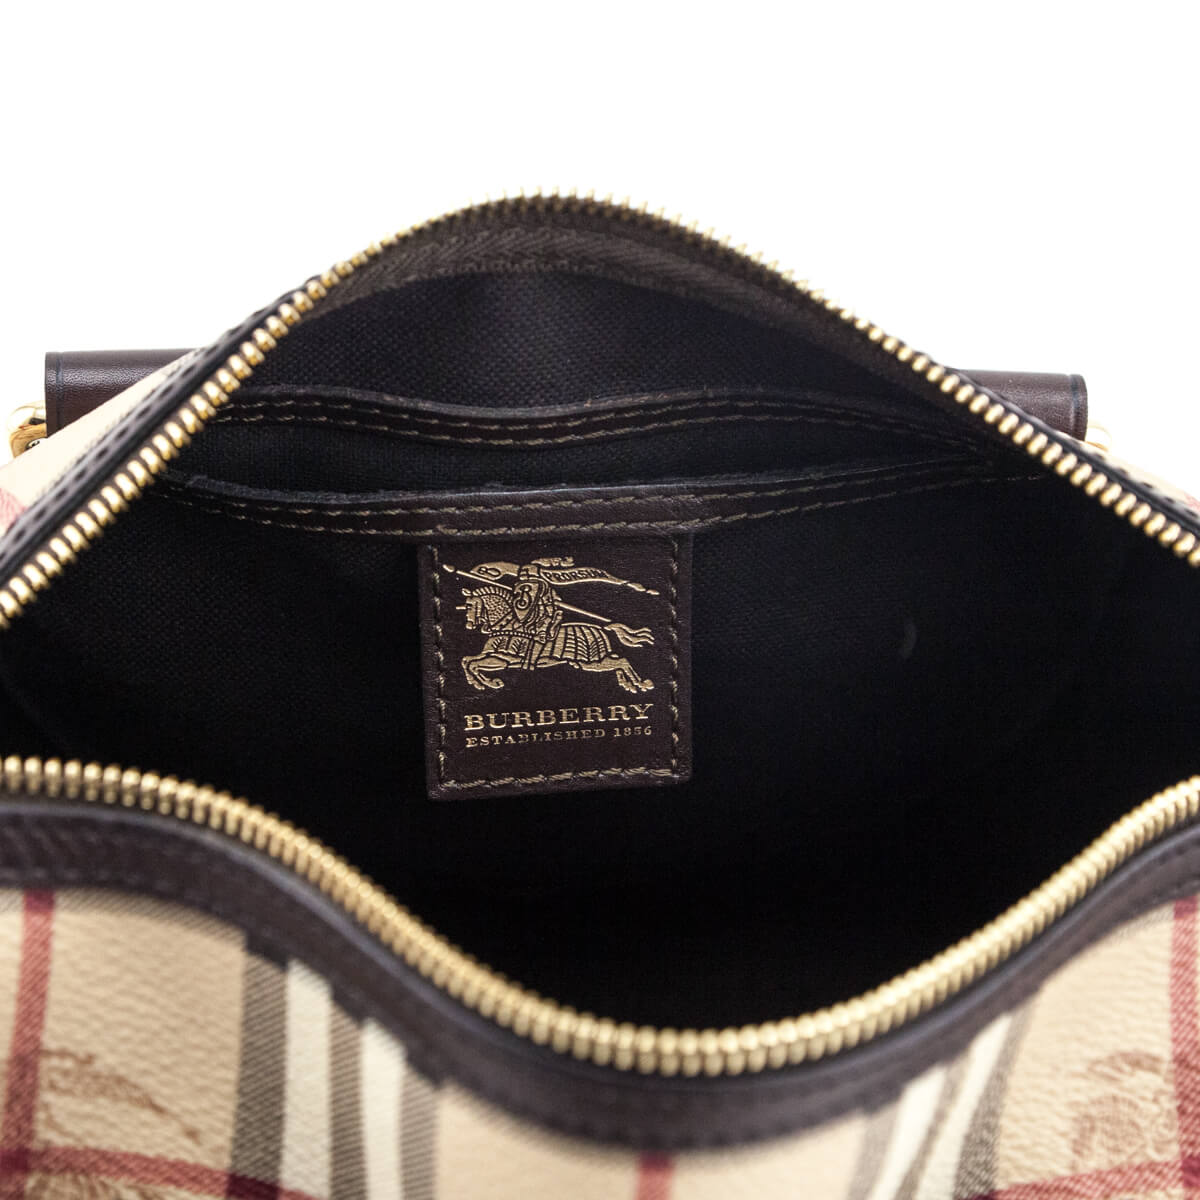 Burberry Haymarket Chester Boston Bag - Love that Bag etc - Preowned Authentic Designer Handbags & Preloved Fashions